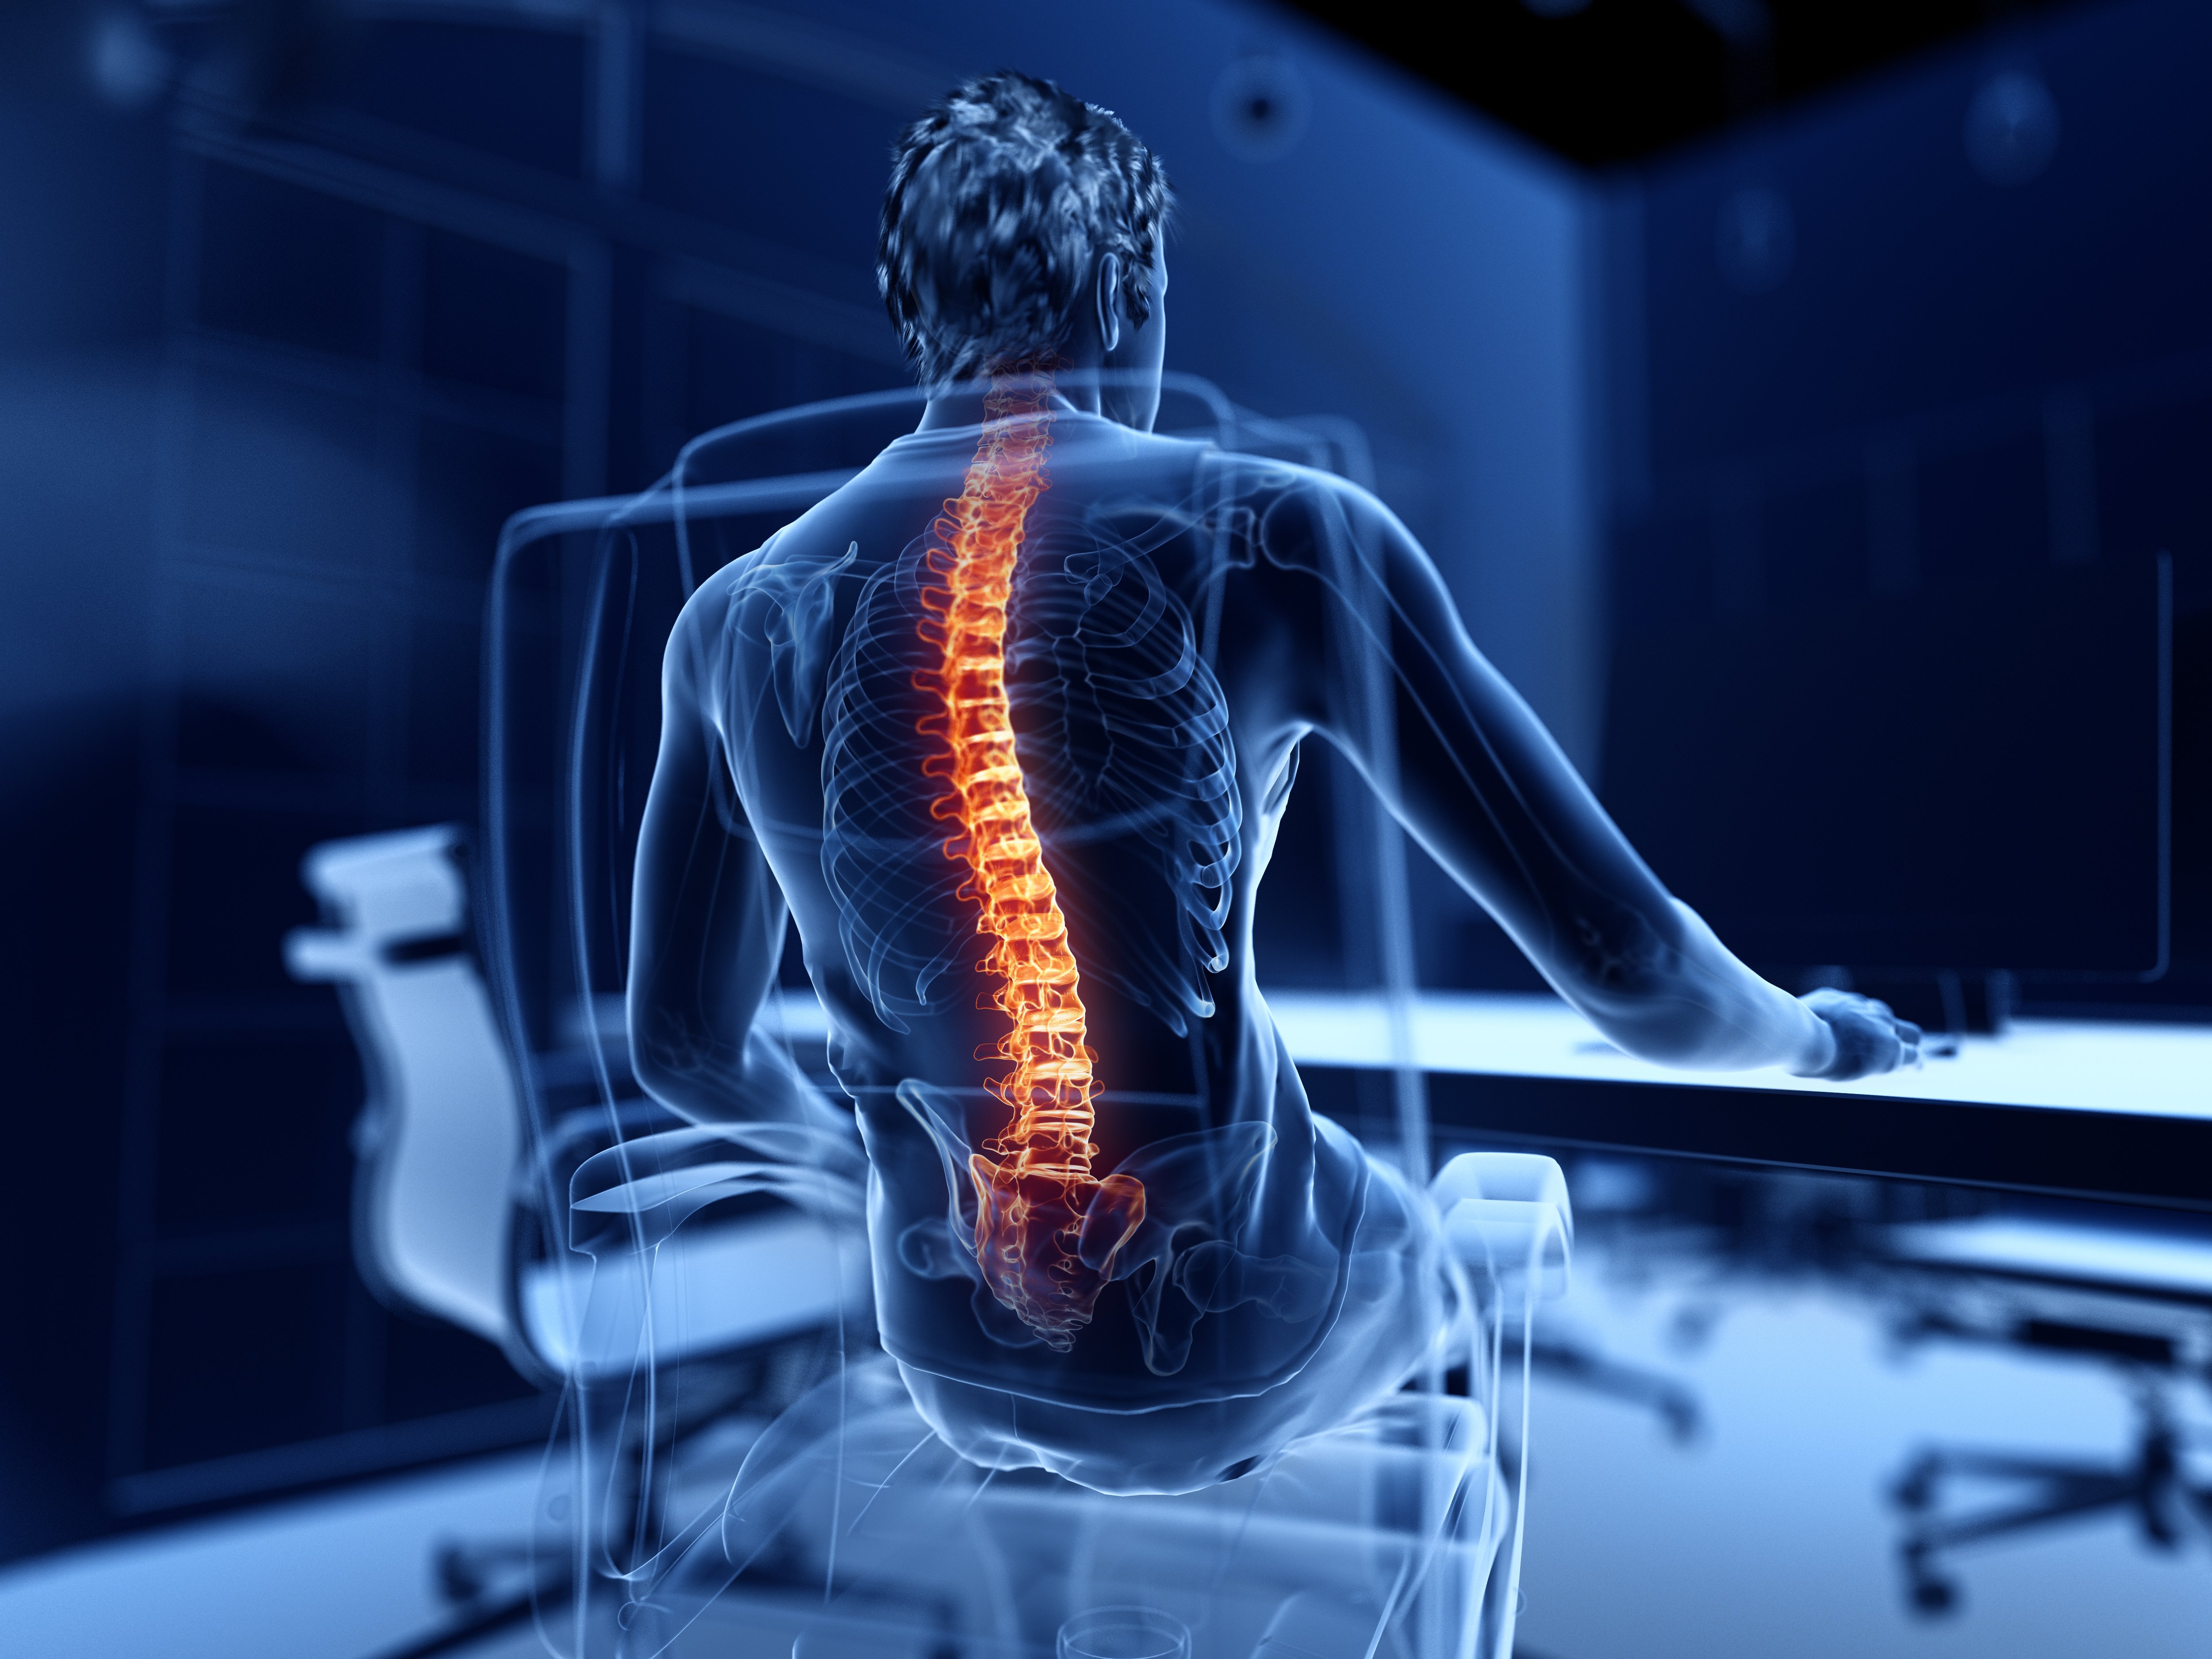 Ergonomics bad posture back spine highlight